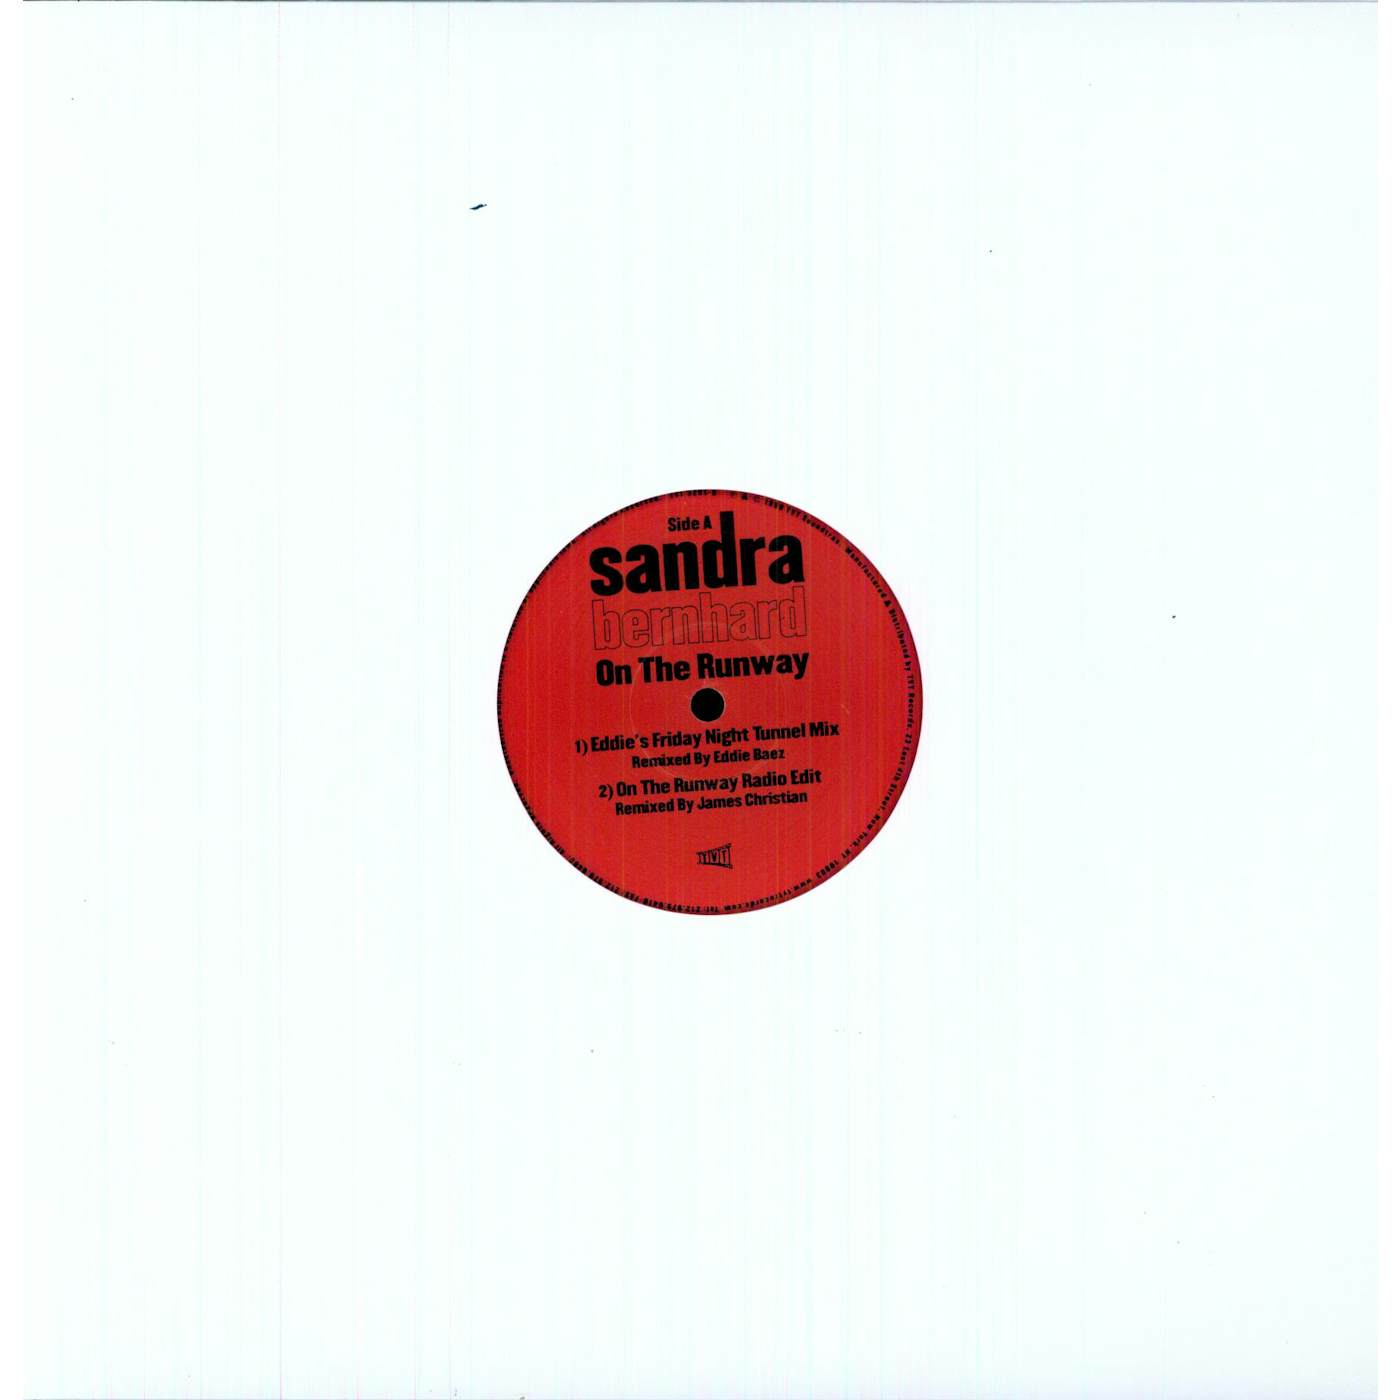 Sandra Bernhard ON THE RUNWAY Vinyl Record